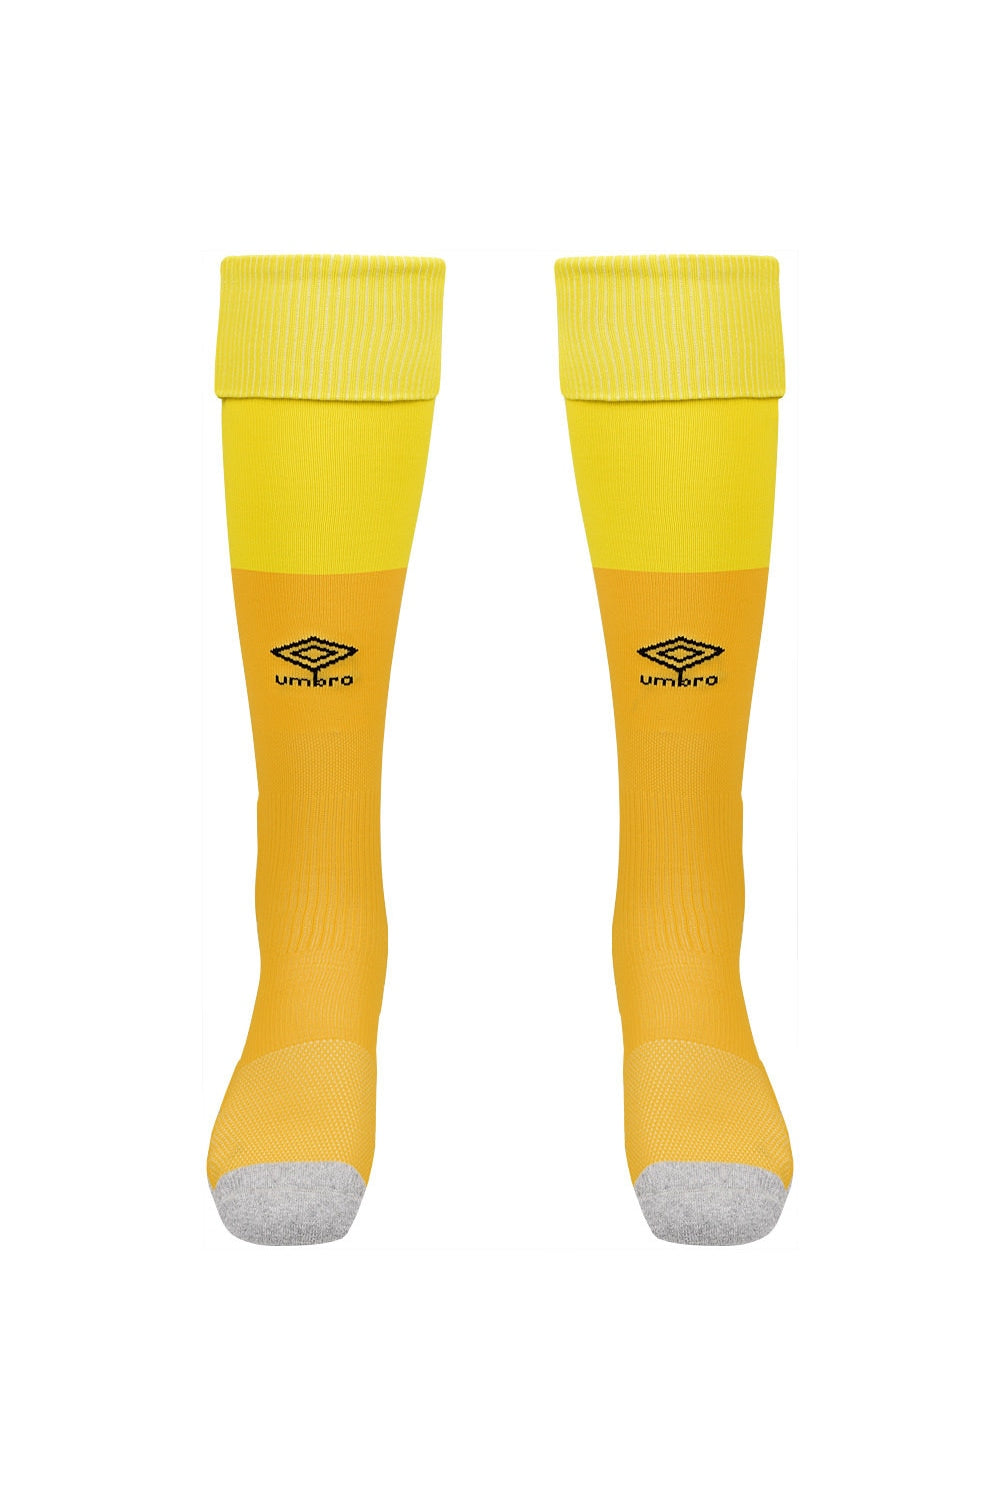 AFC Bournemouth Mens 22/23 Goalkeeping Football Socks - Yellow/Gray/Black